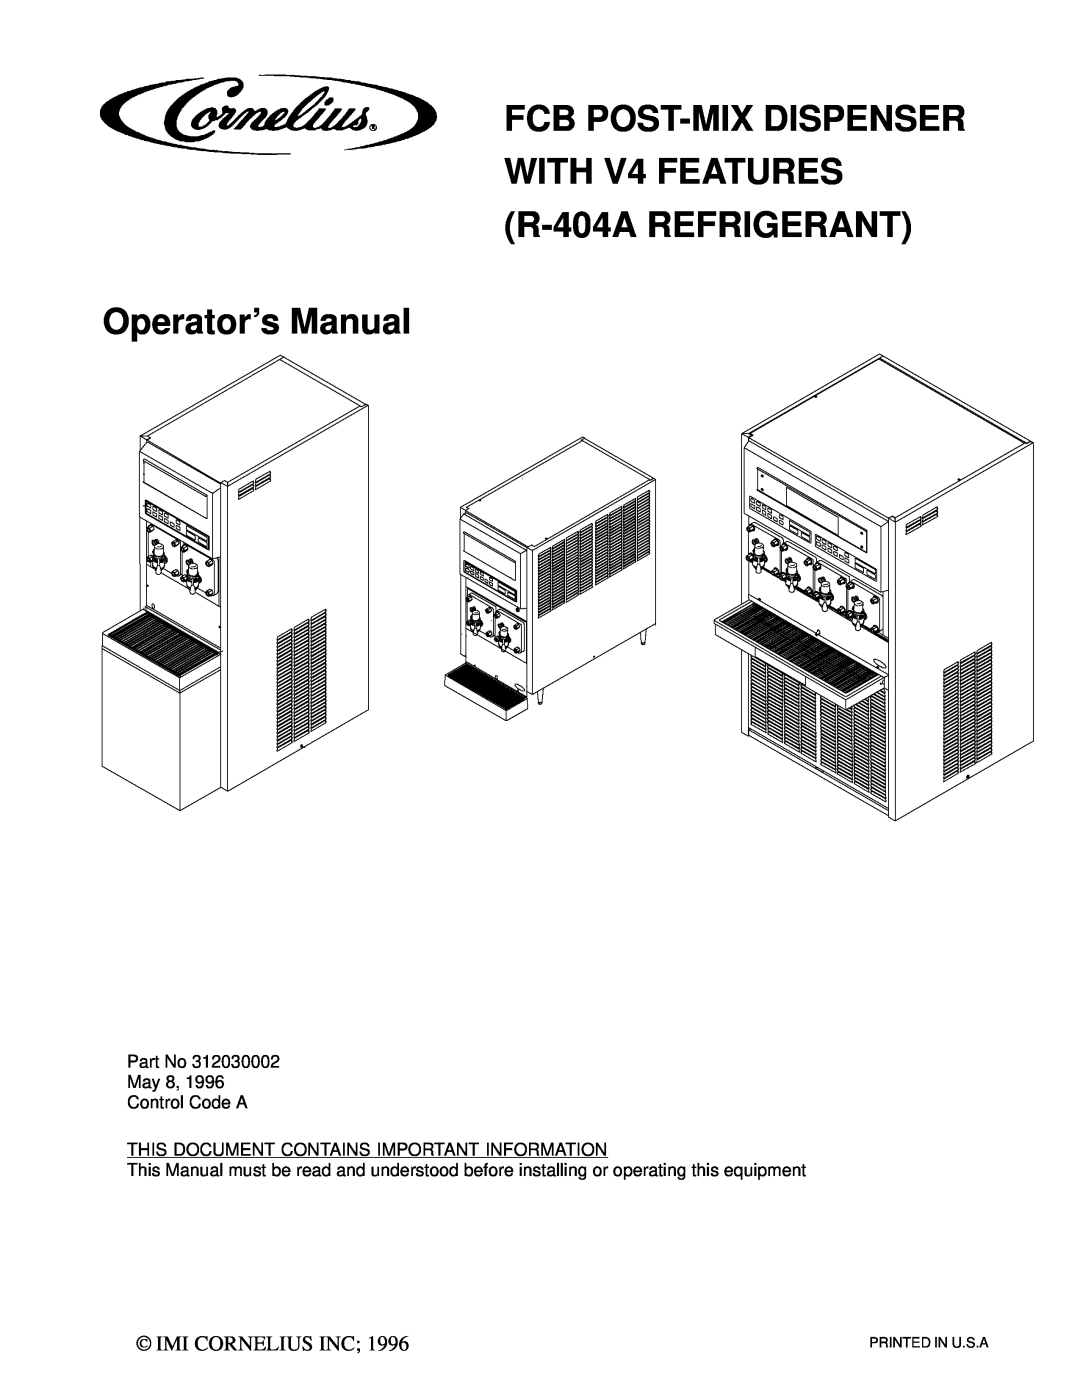 Cornelius manual FCB POST-MIX DISPENSER WITH V4 FEATURES R-404A REFRIGERANT, Operator’s Manual,  Imi Cornelius Inc 